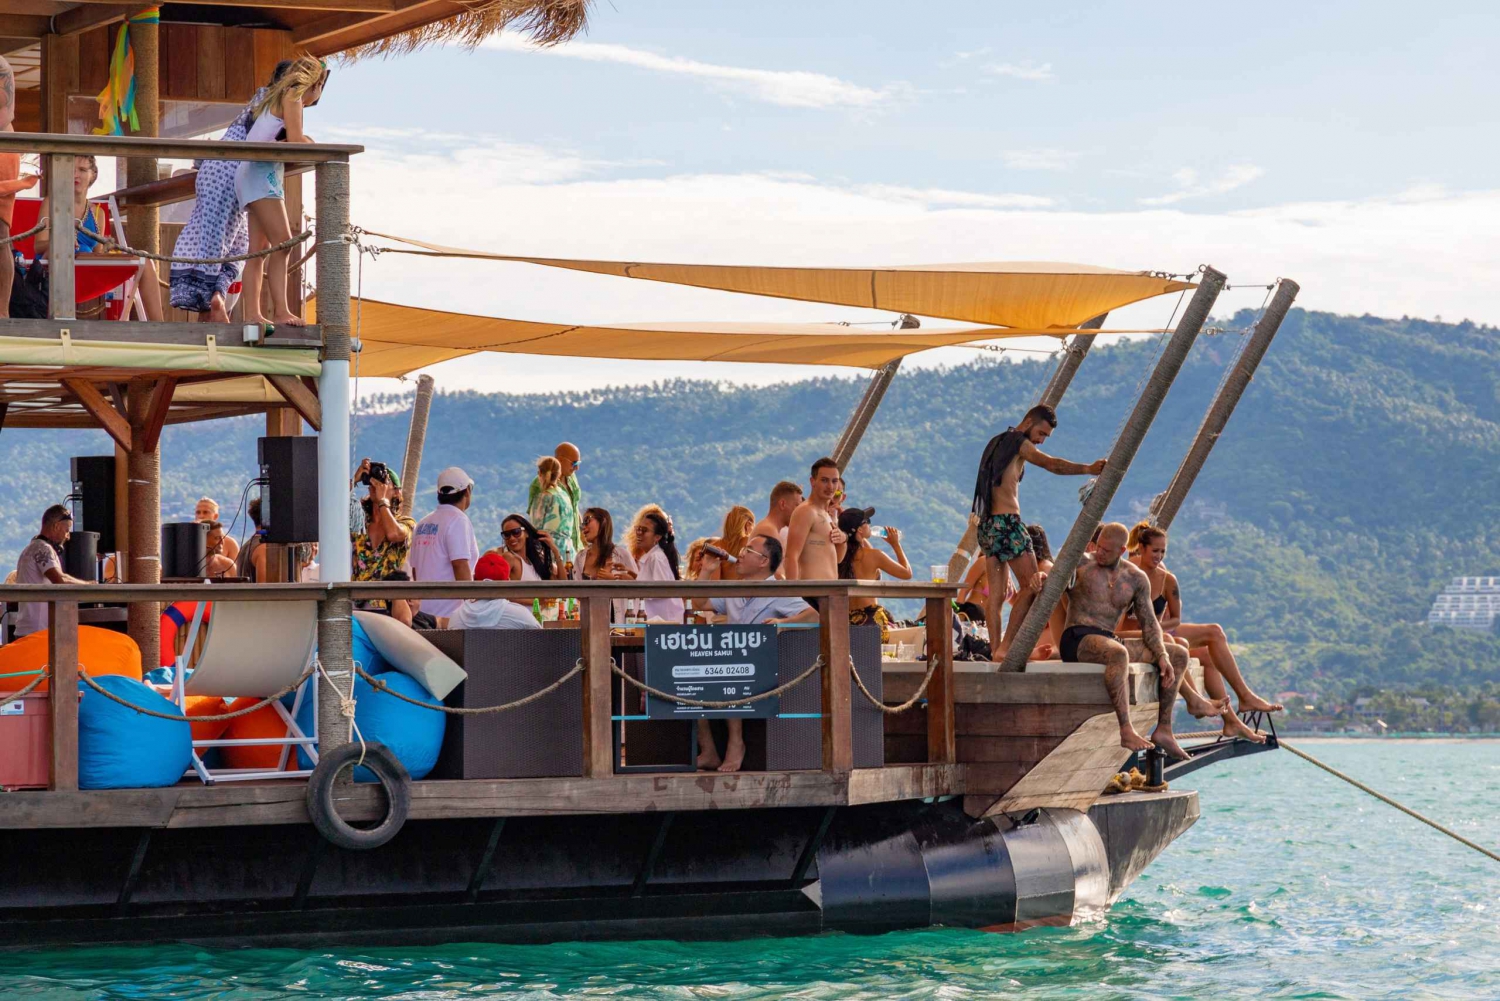 From Koh Samui: Floating Bar Cruise to Koh Mudsum w/ Buffet